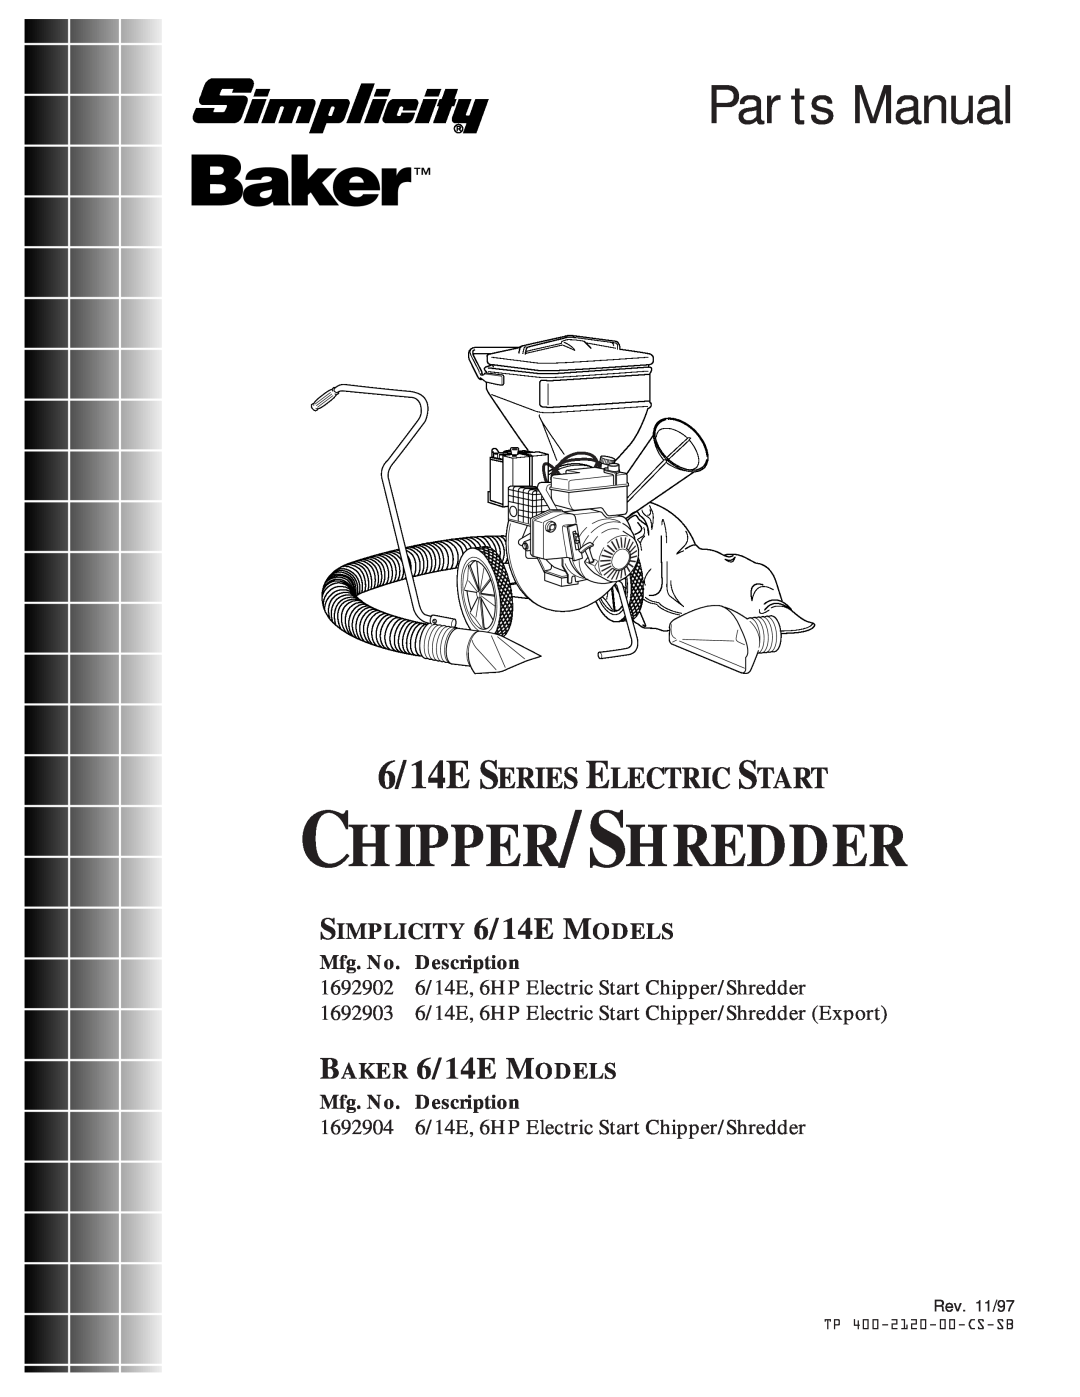 Simplicity 1692902 6/14E manual Parts Manual, Chipper/Shredder, 6/14E SERIES ELECTRIC START, SIMPLICITY 6/14E MODELS 